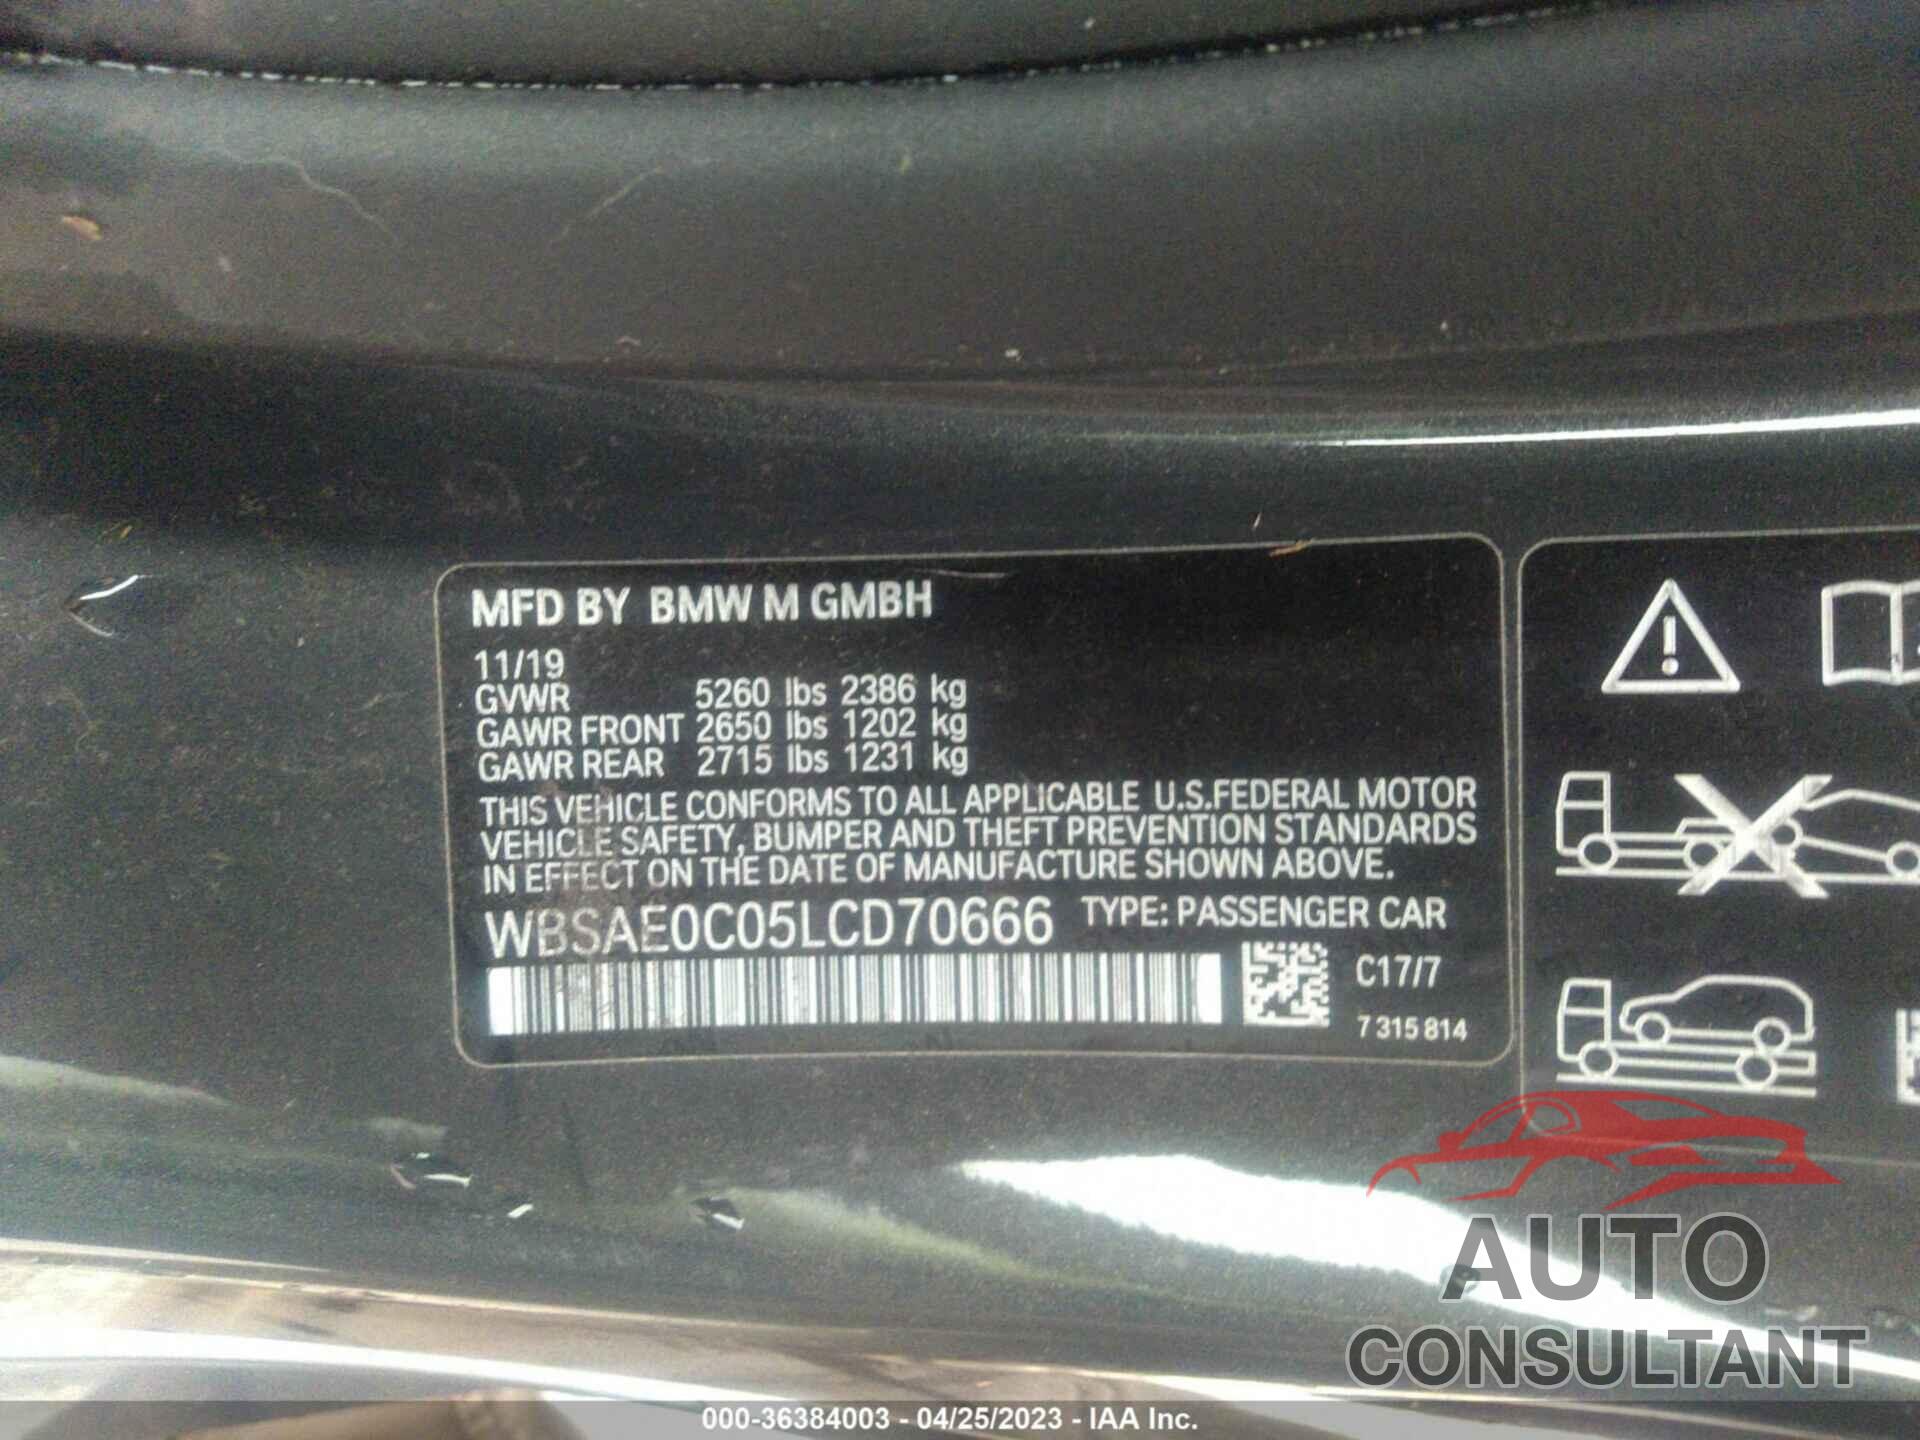 BMW M8 2020 - WBSAE0C05LCD70666